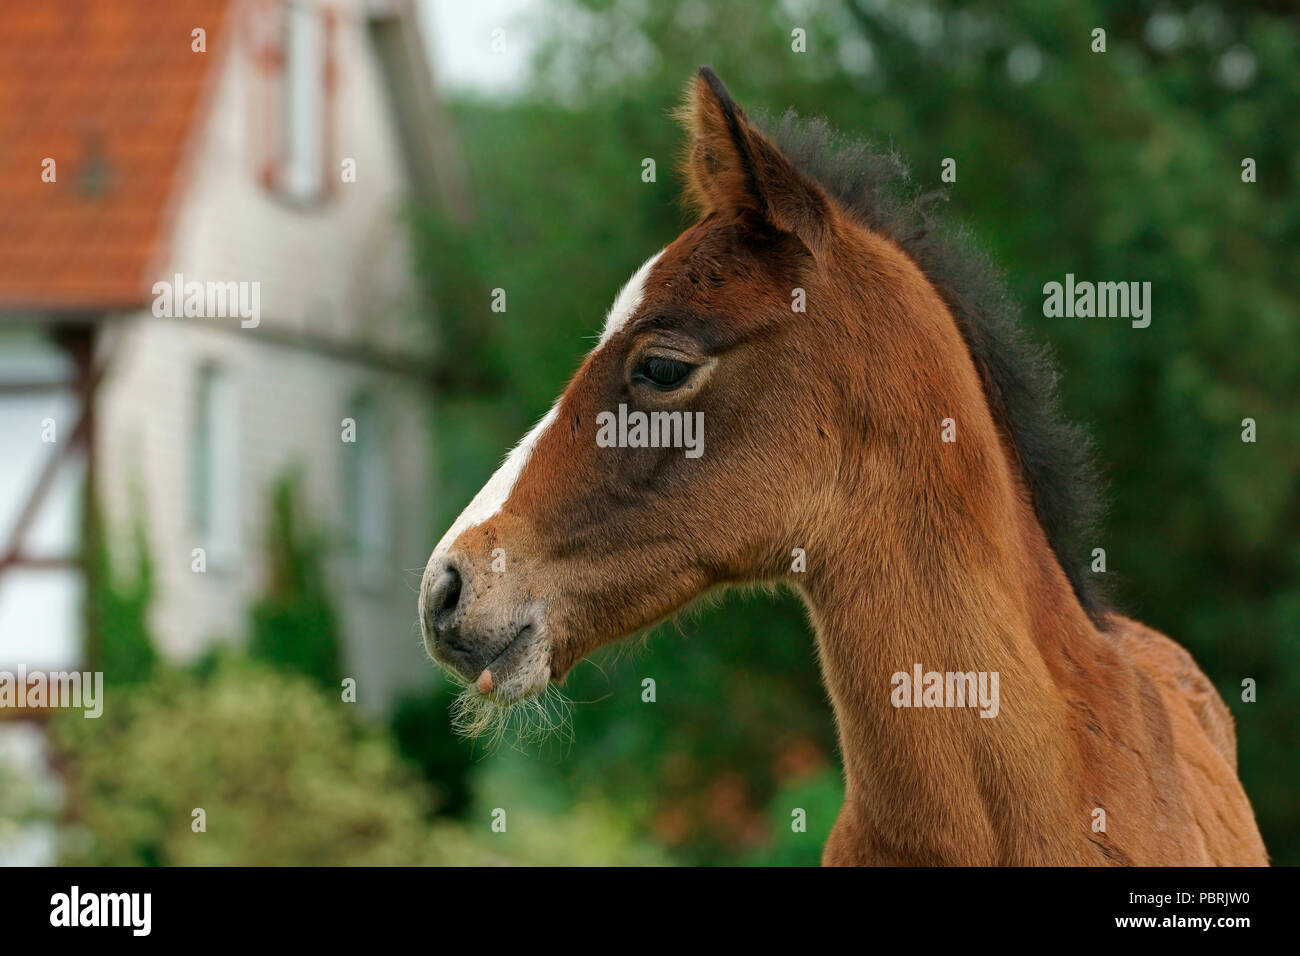 Foal, animal portrait, Hesse, Germany Stock Photo